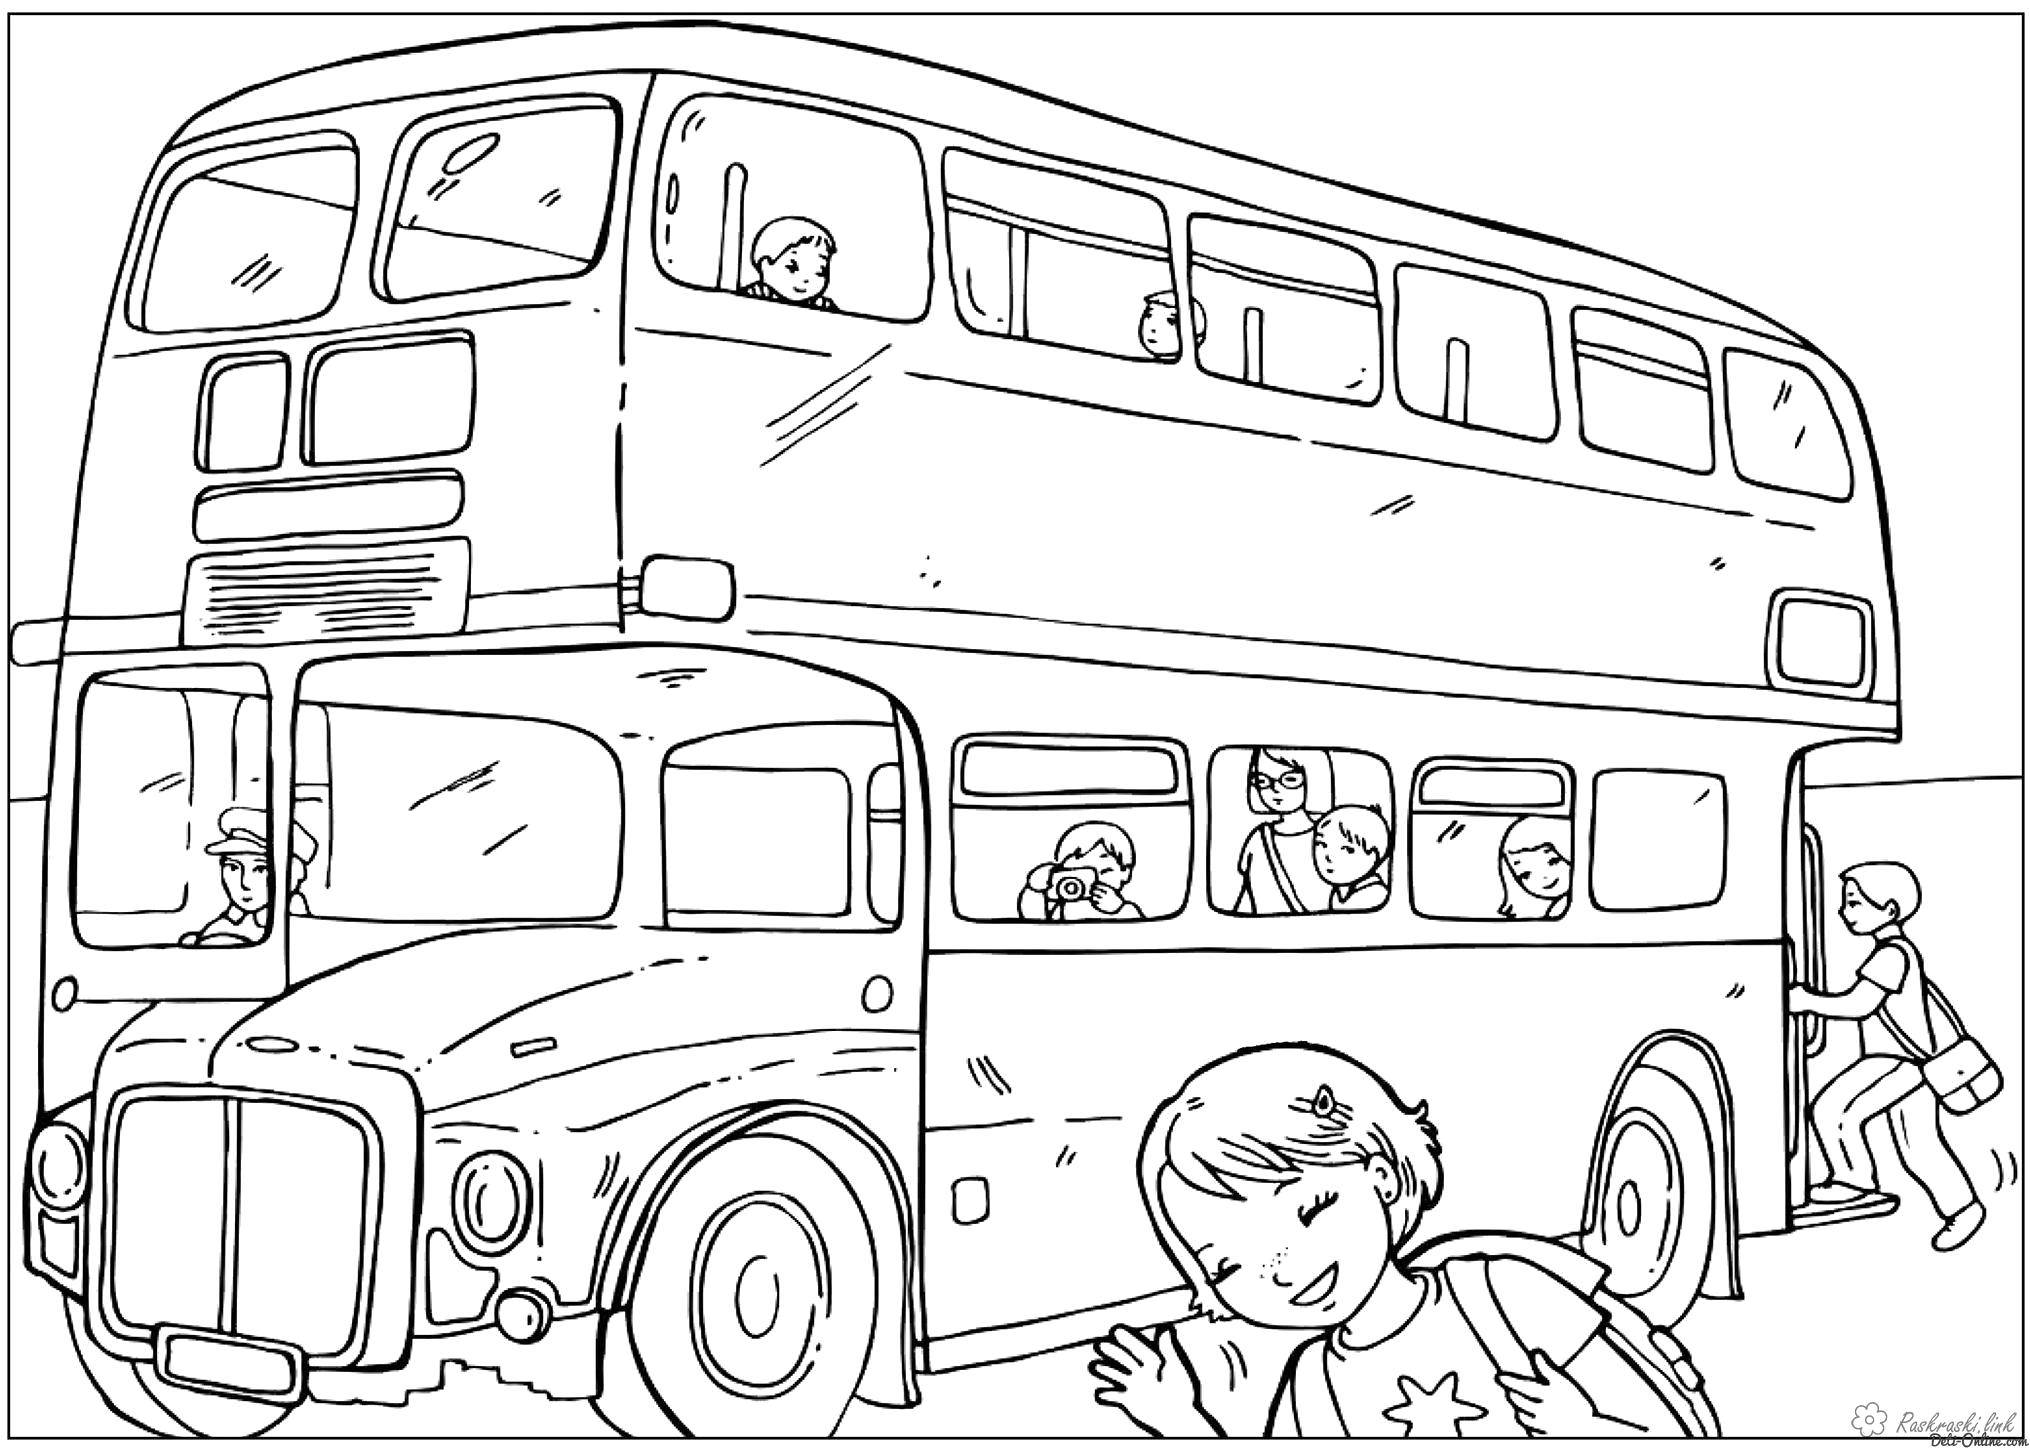 Coloring School bus. Category school. Tags:  School, bus, students.